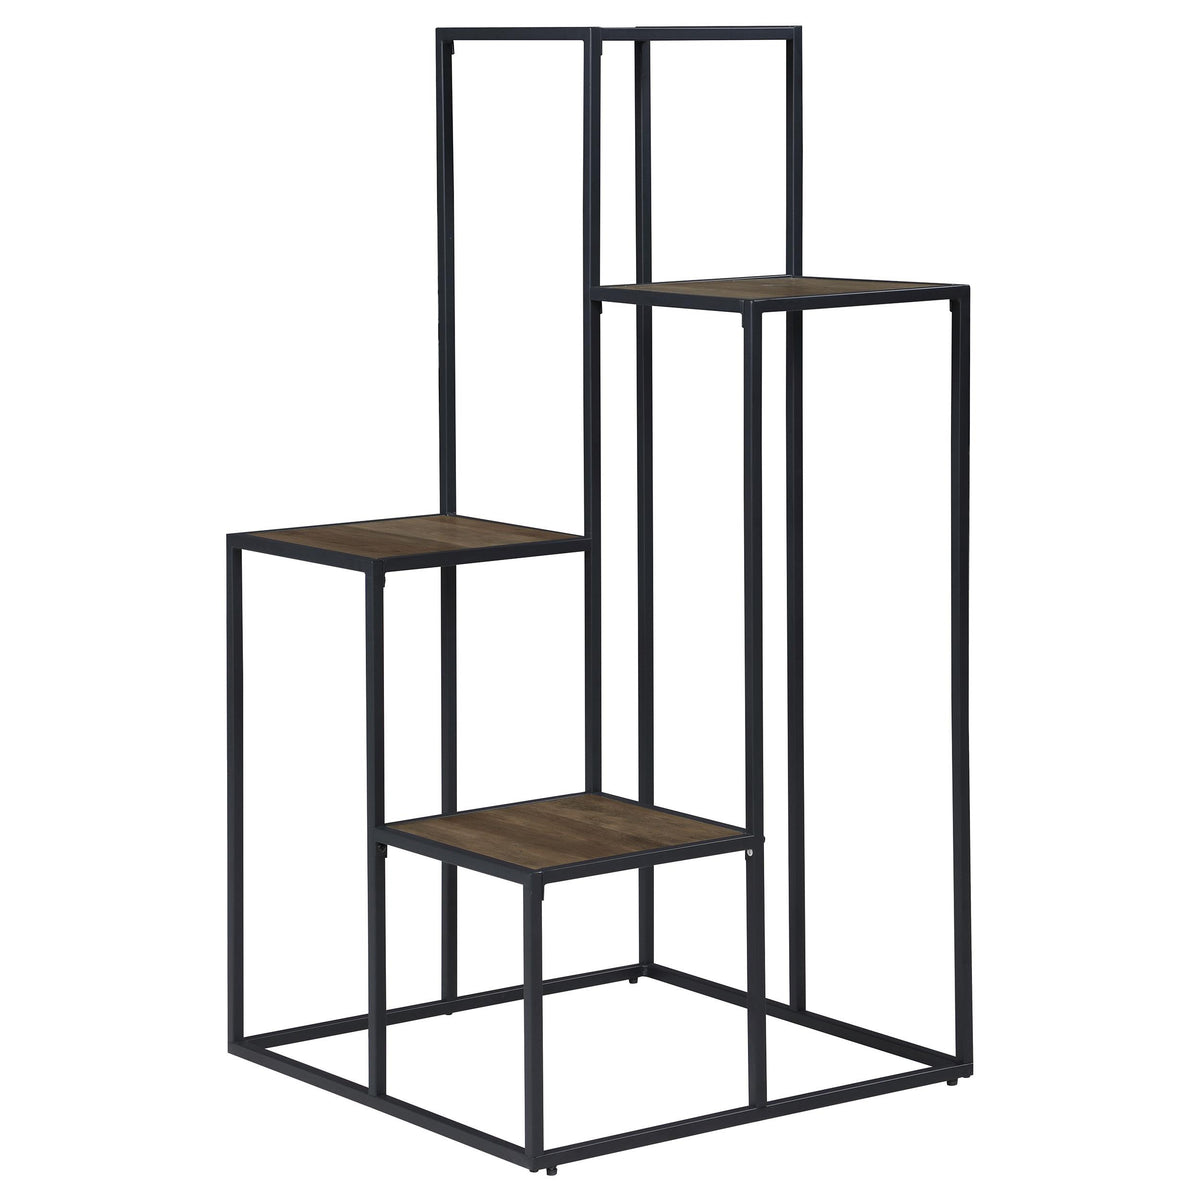 Rito 4-tier Display Shelf Rustic Brown and Black  Half Price Furniture